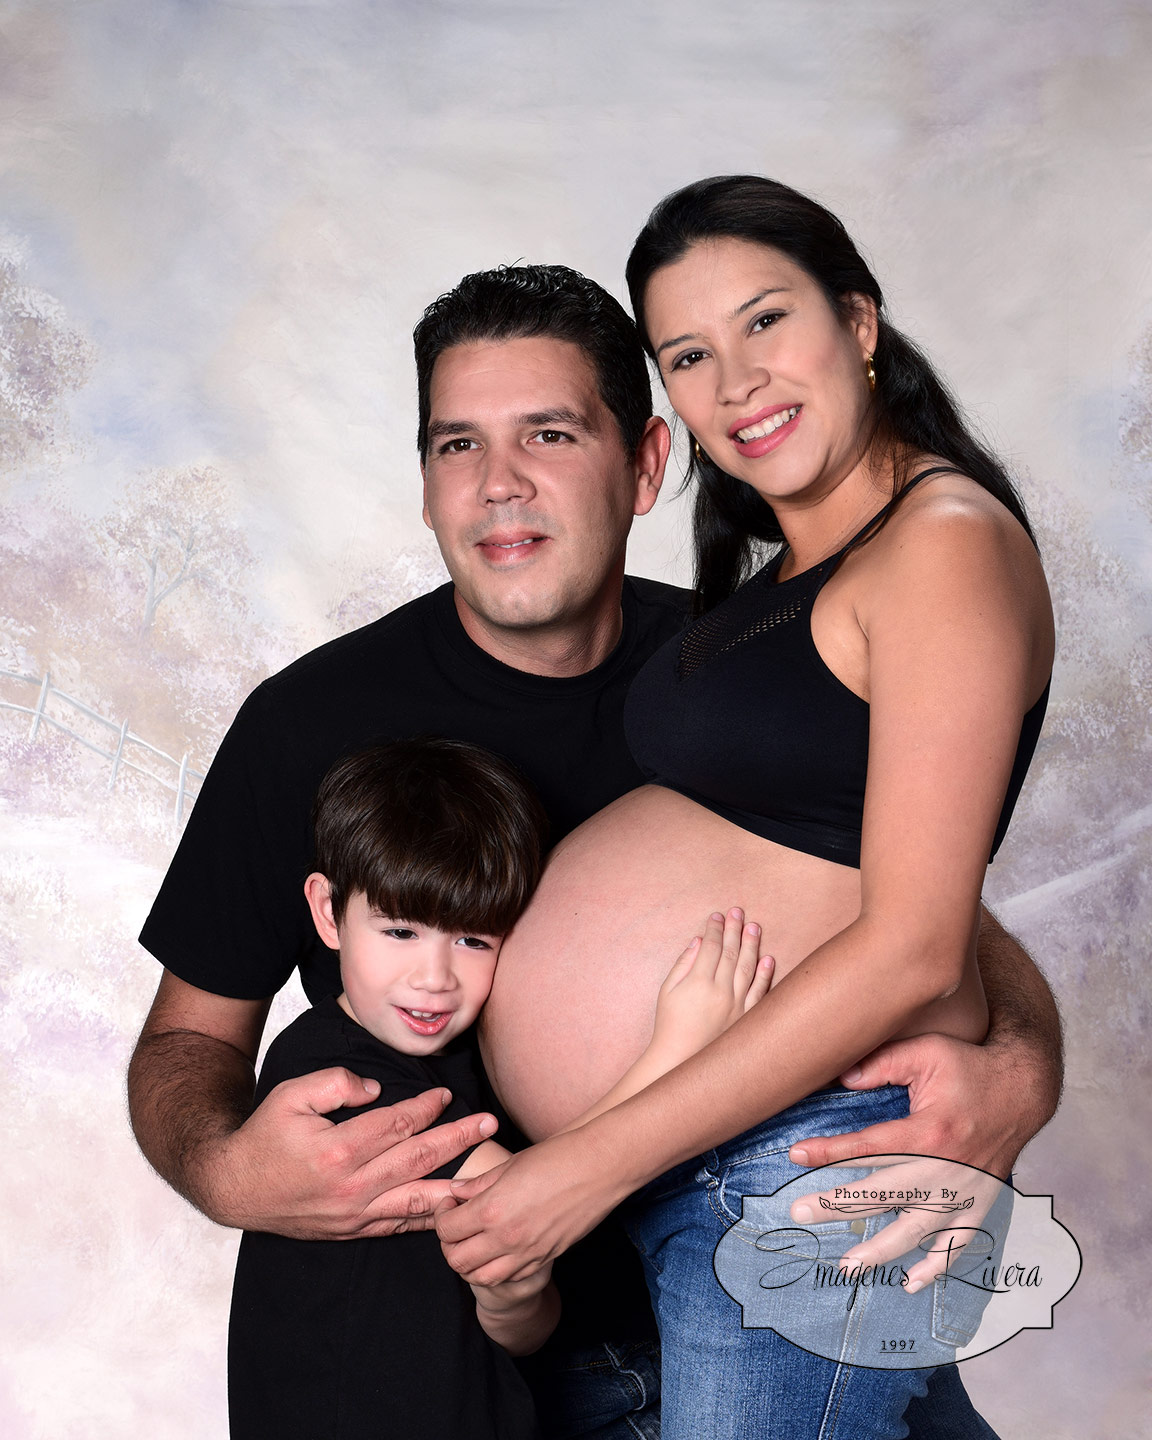 ♥ Pregnancy lifestyle pictures | Imagenes Rivera Miami ♥